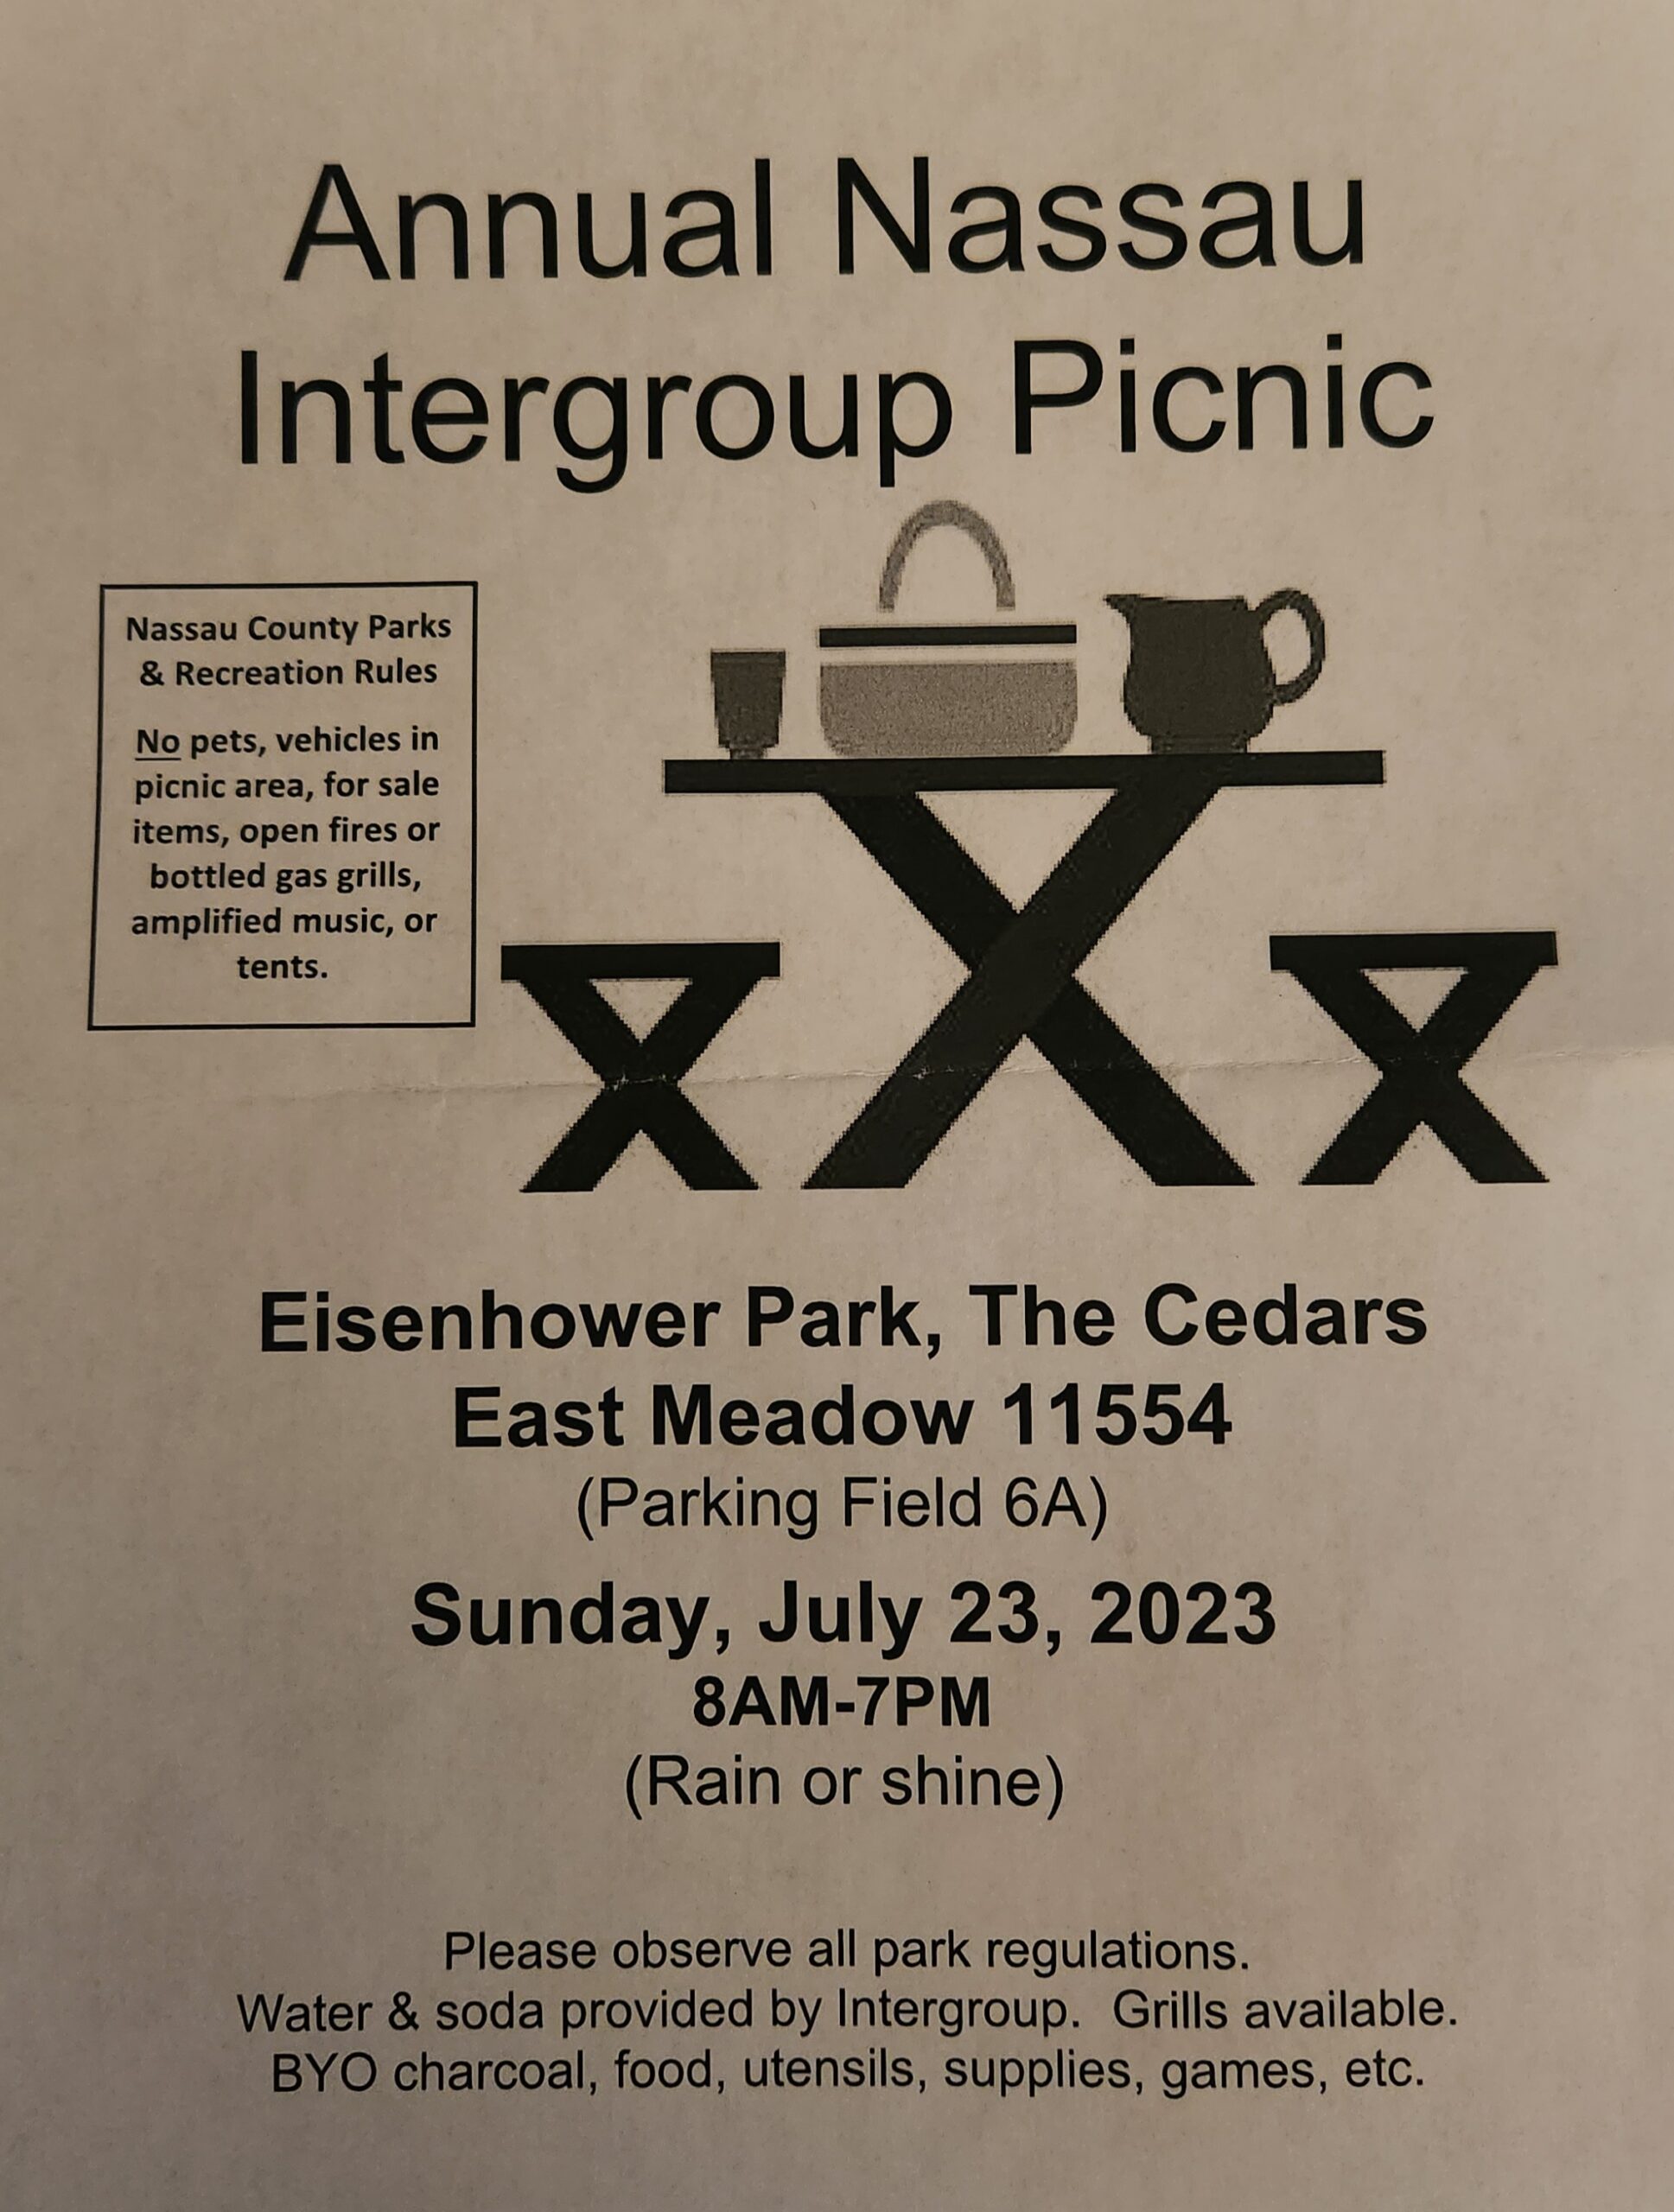 Annual Nassau Intergroup Picnic @ Eisenhower Park, The Cedars